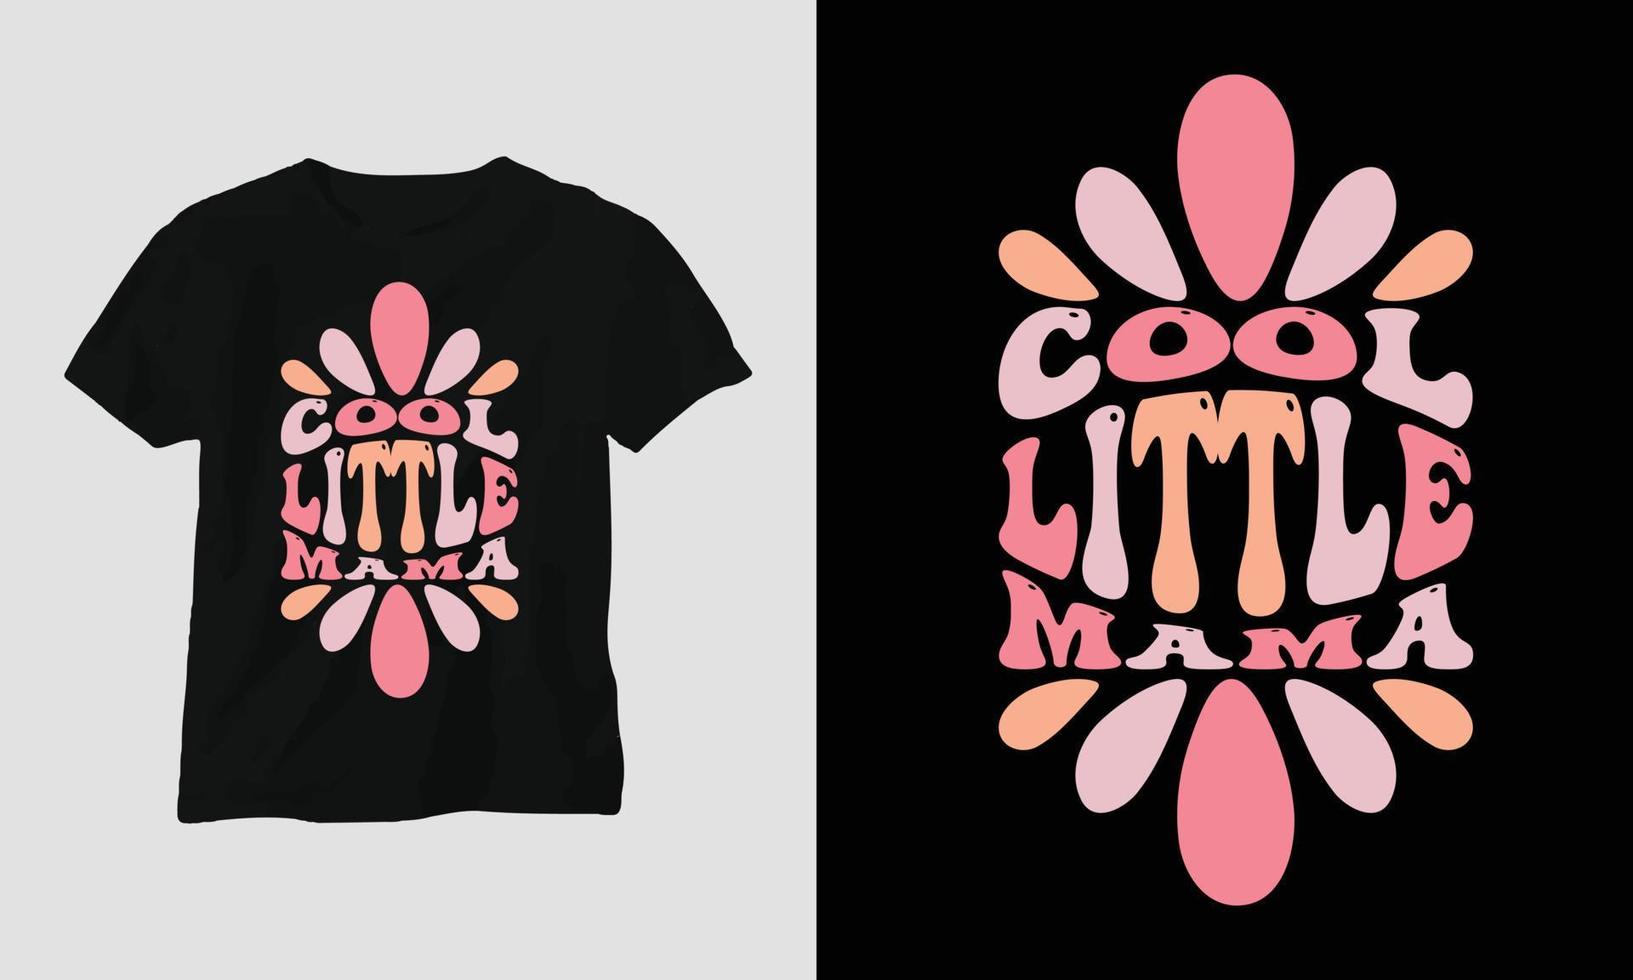 cool little mama - Mom Wavy Retro Groovy T-shirt vector